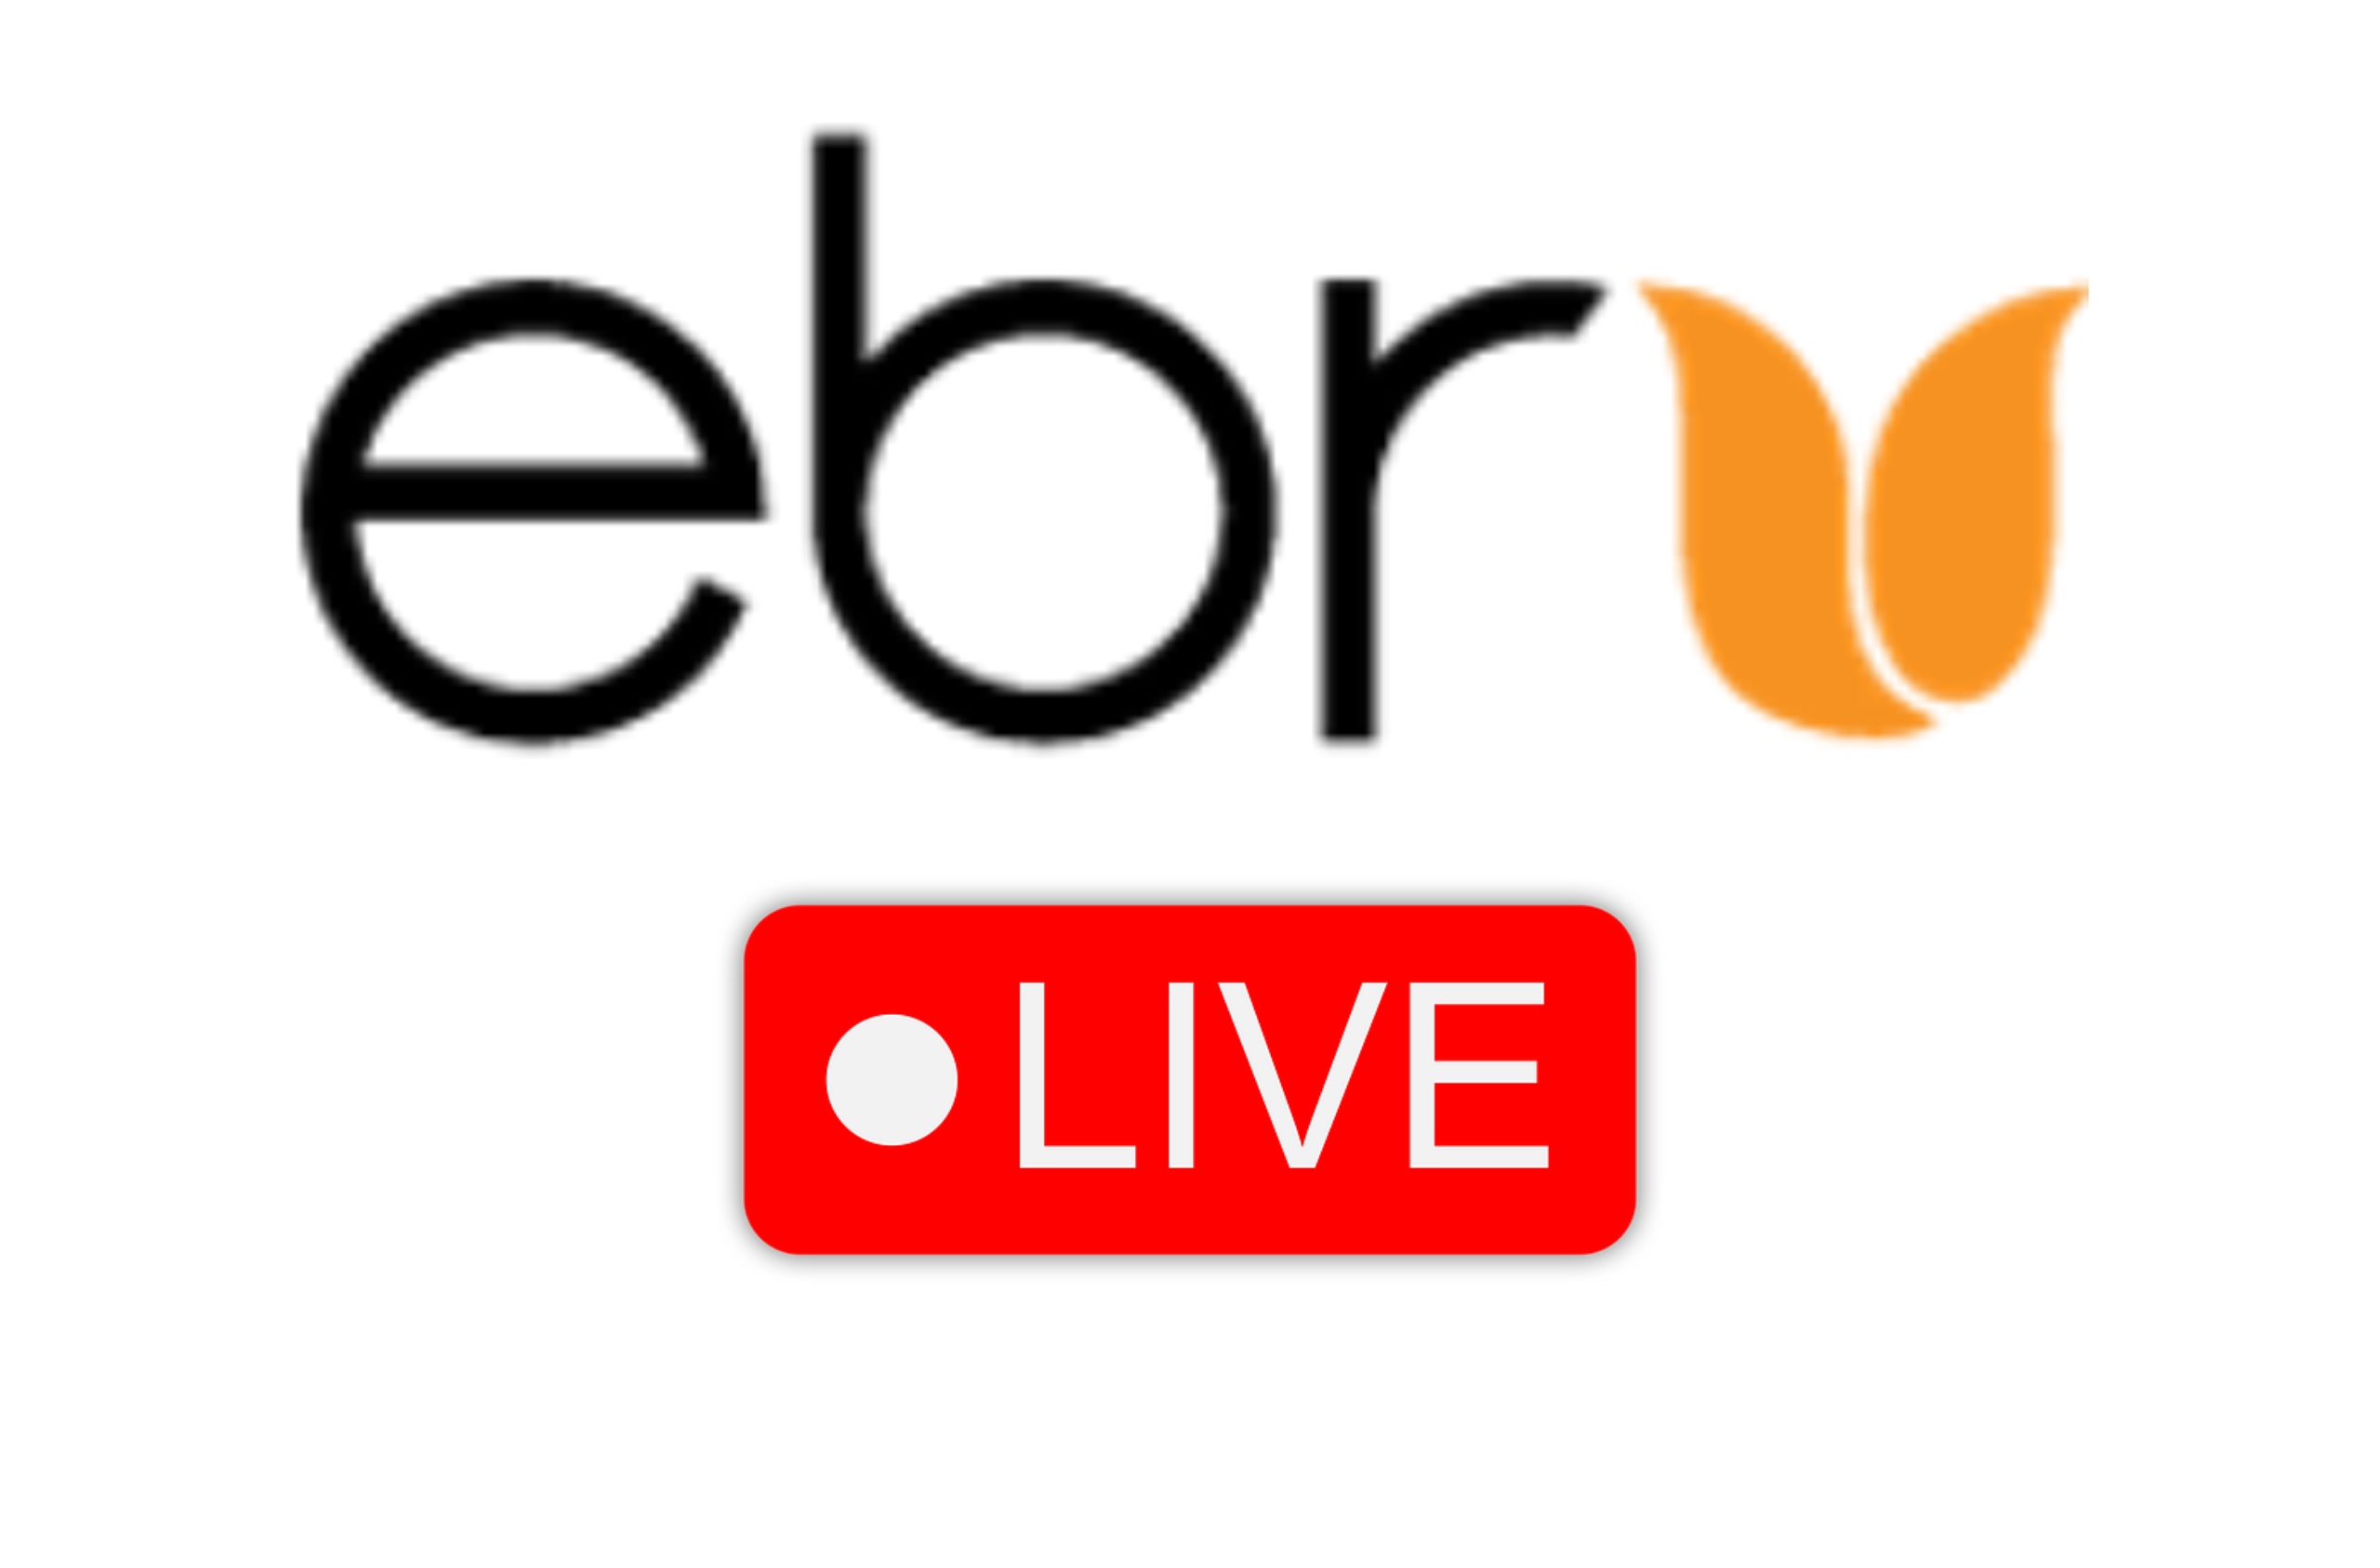 EBRU TV LIVE